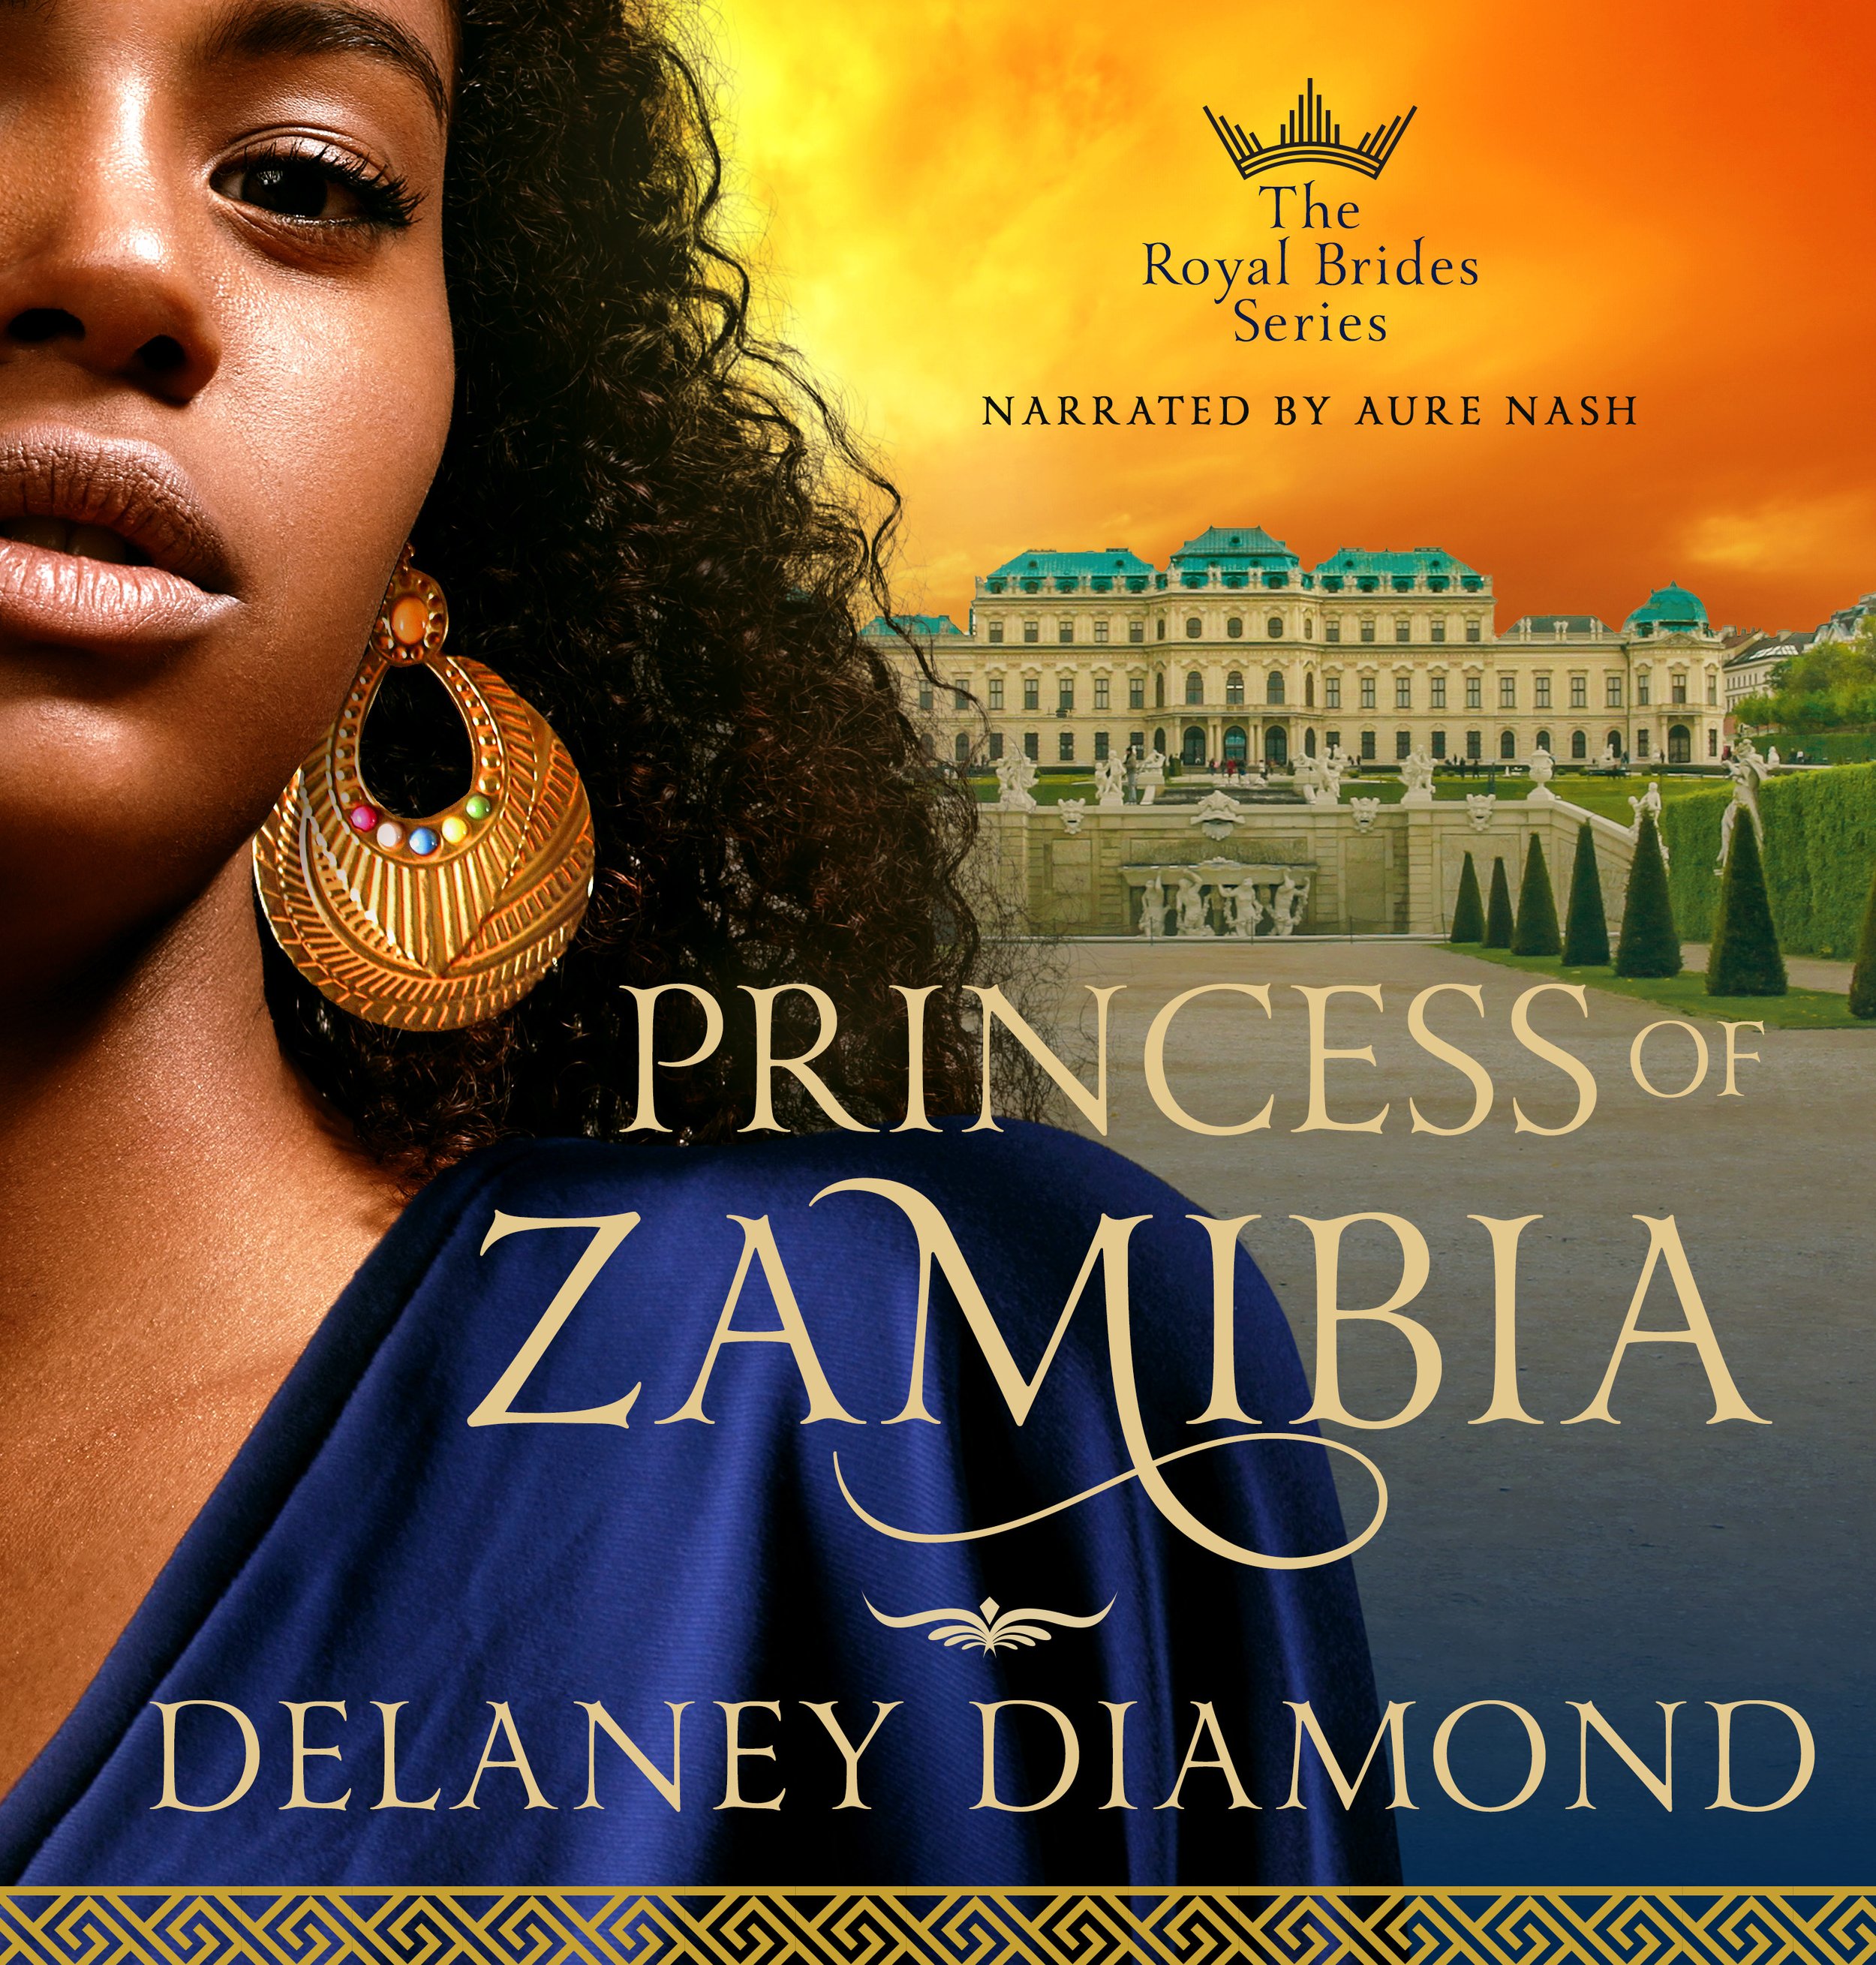 Delaney Diamond_Princess of Zamibia.jpeg